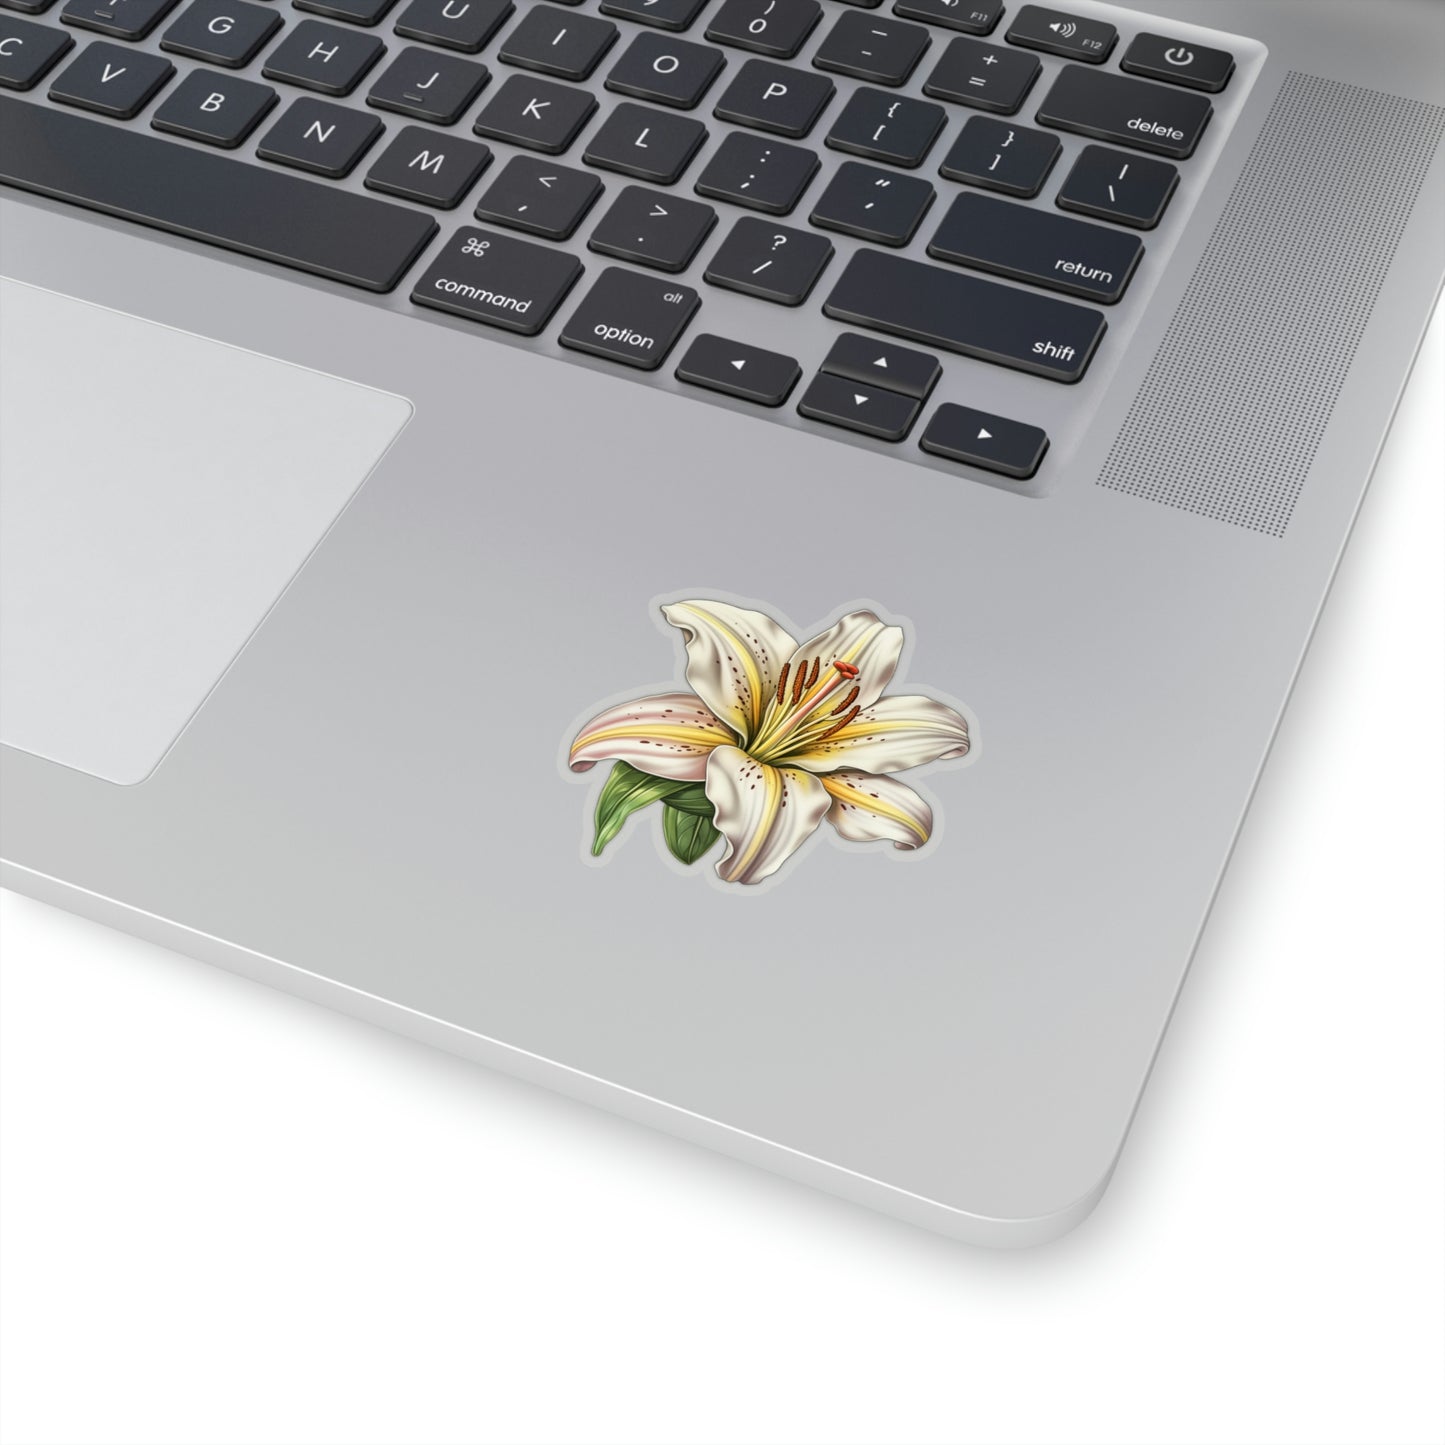 Lily Flower Sticker, White Floral Art Laptop Decal Vinyl Cute Waterbottle Tumbler Car Waterproof Bumper Aesthetic Die Cut Wall Mural Starcove Fashion